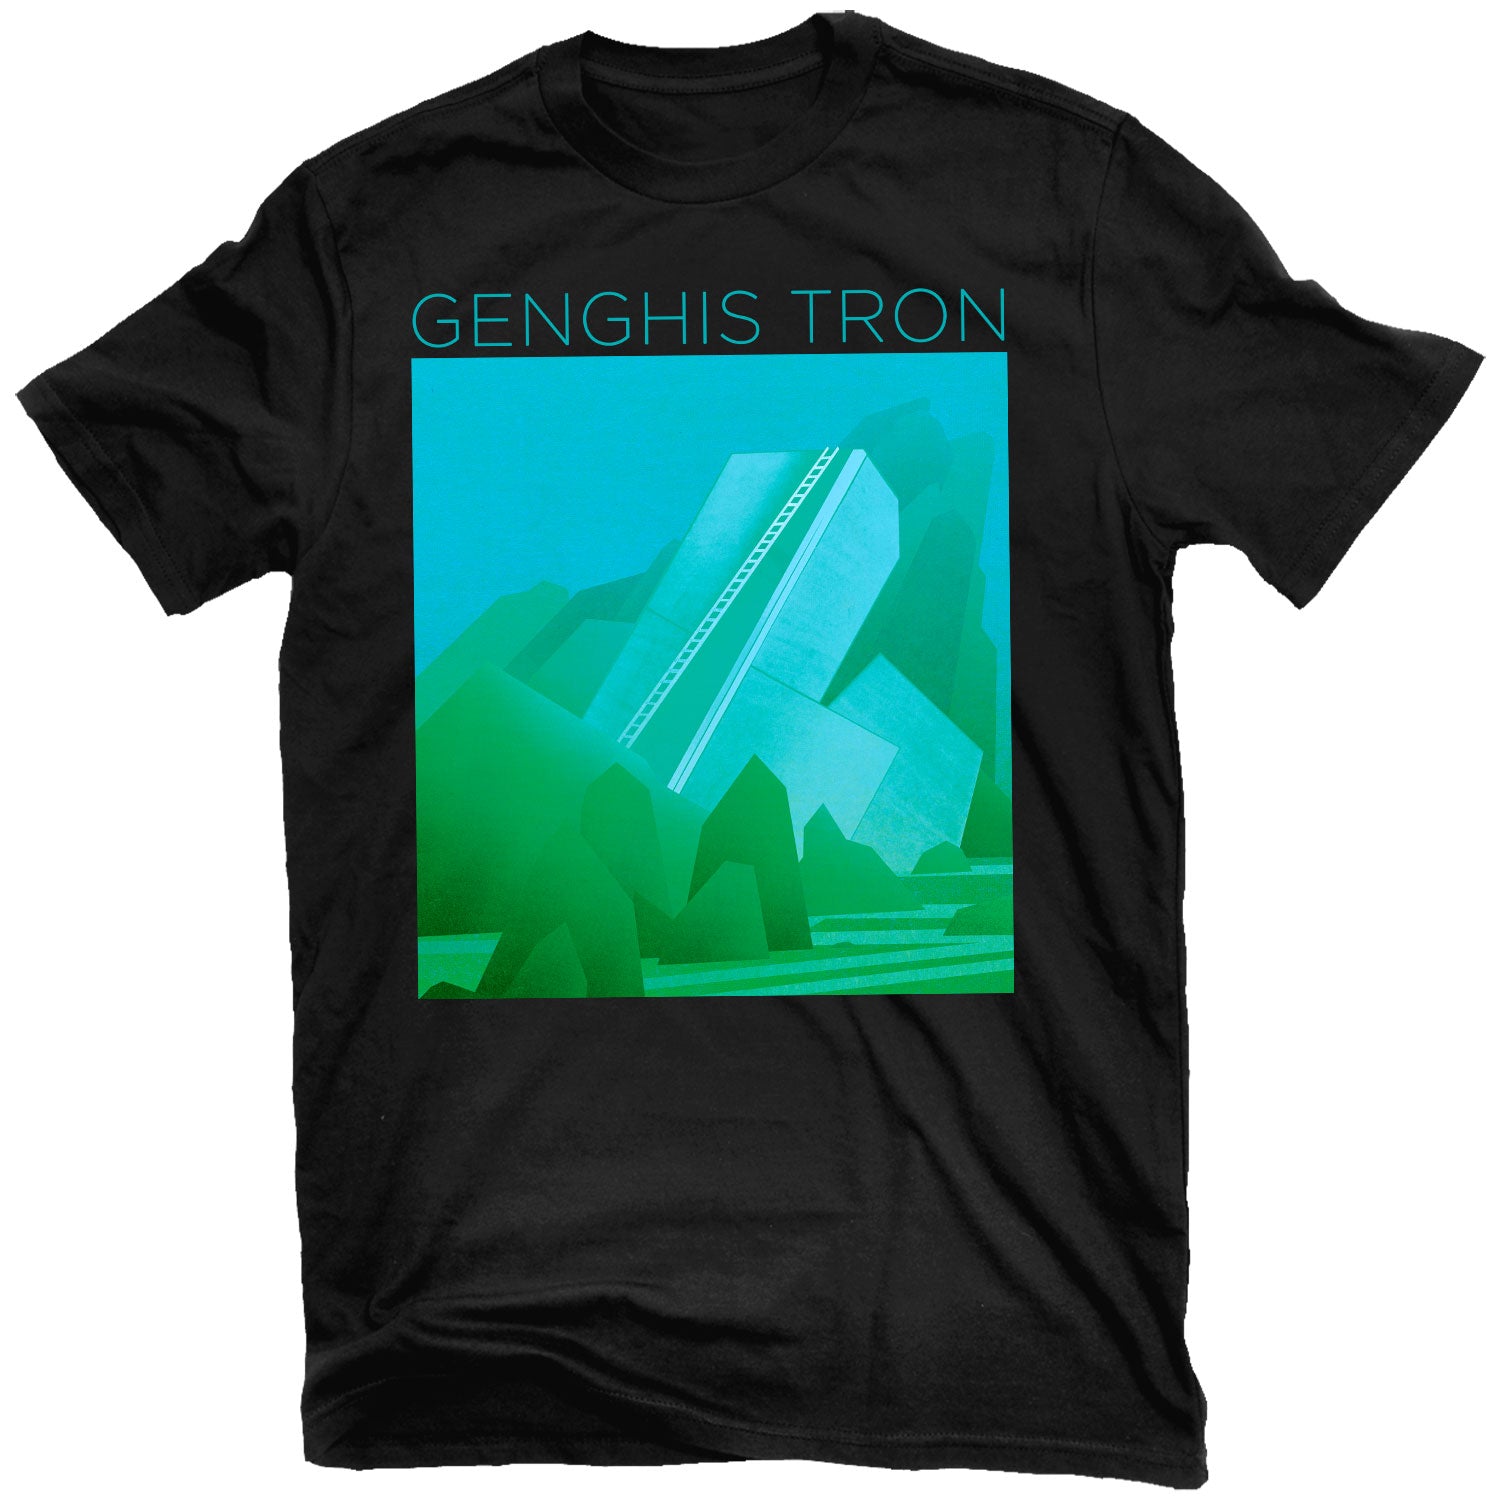 Genghis Tron "Dream Weapon" T-Shirt